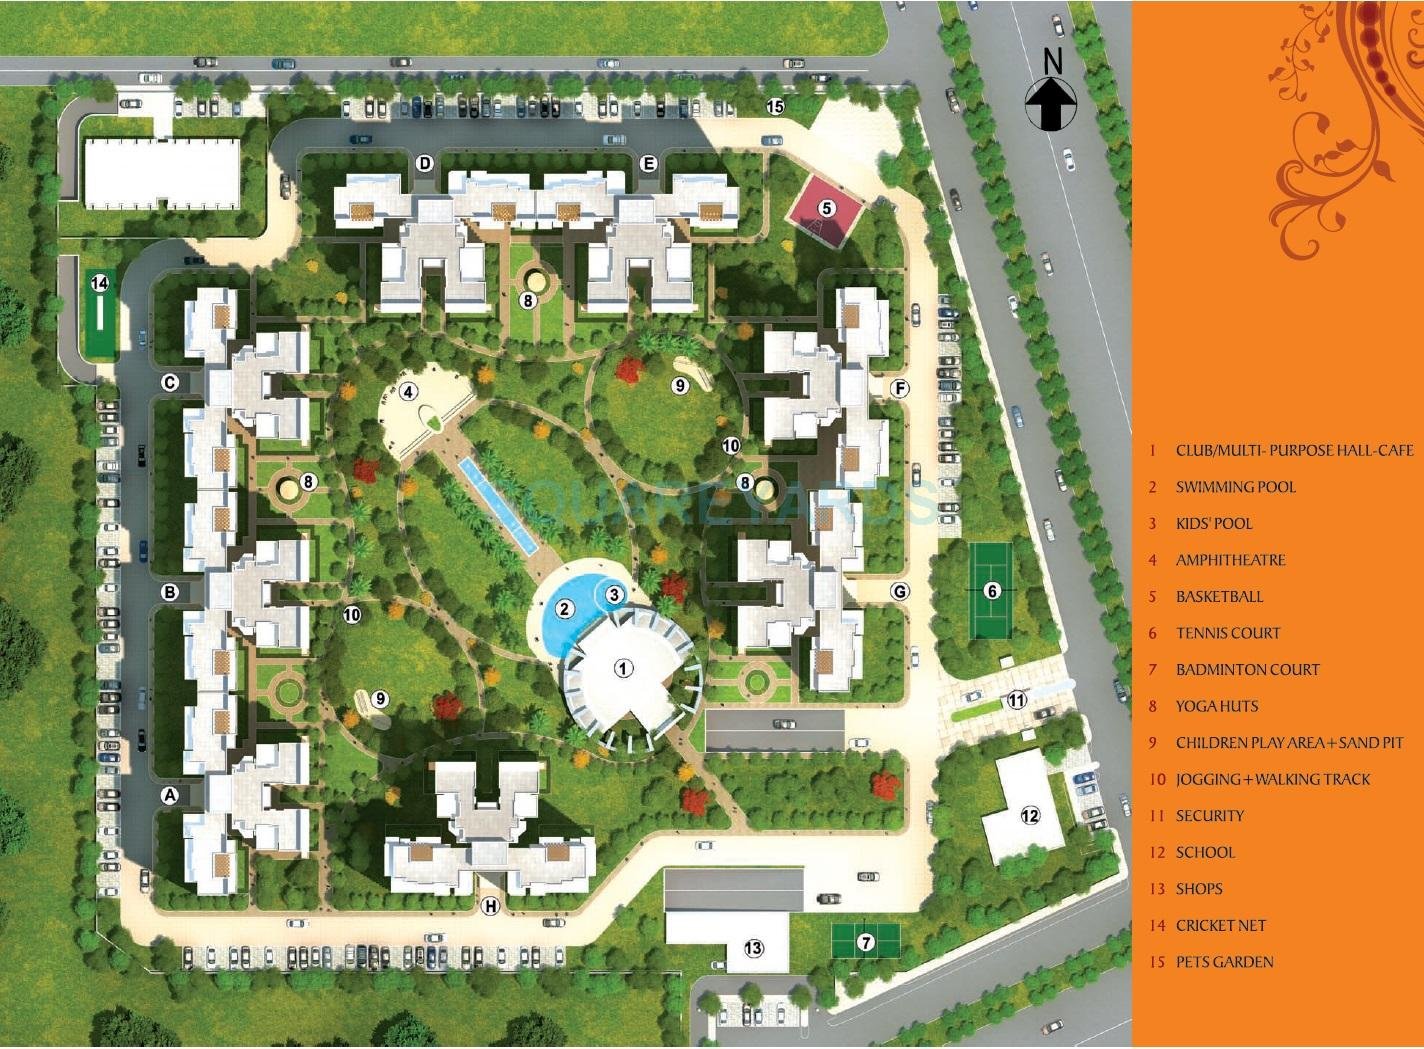 bestech-park-view-sanskruti-master-plan-image1